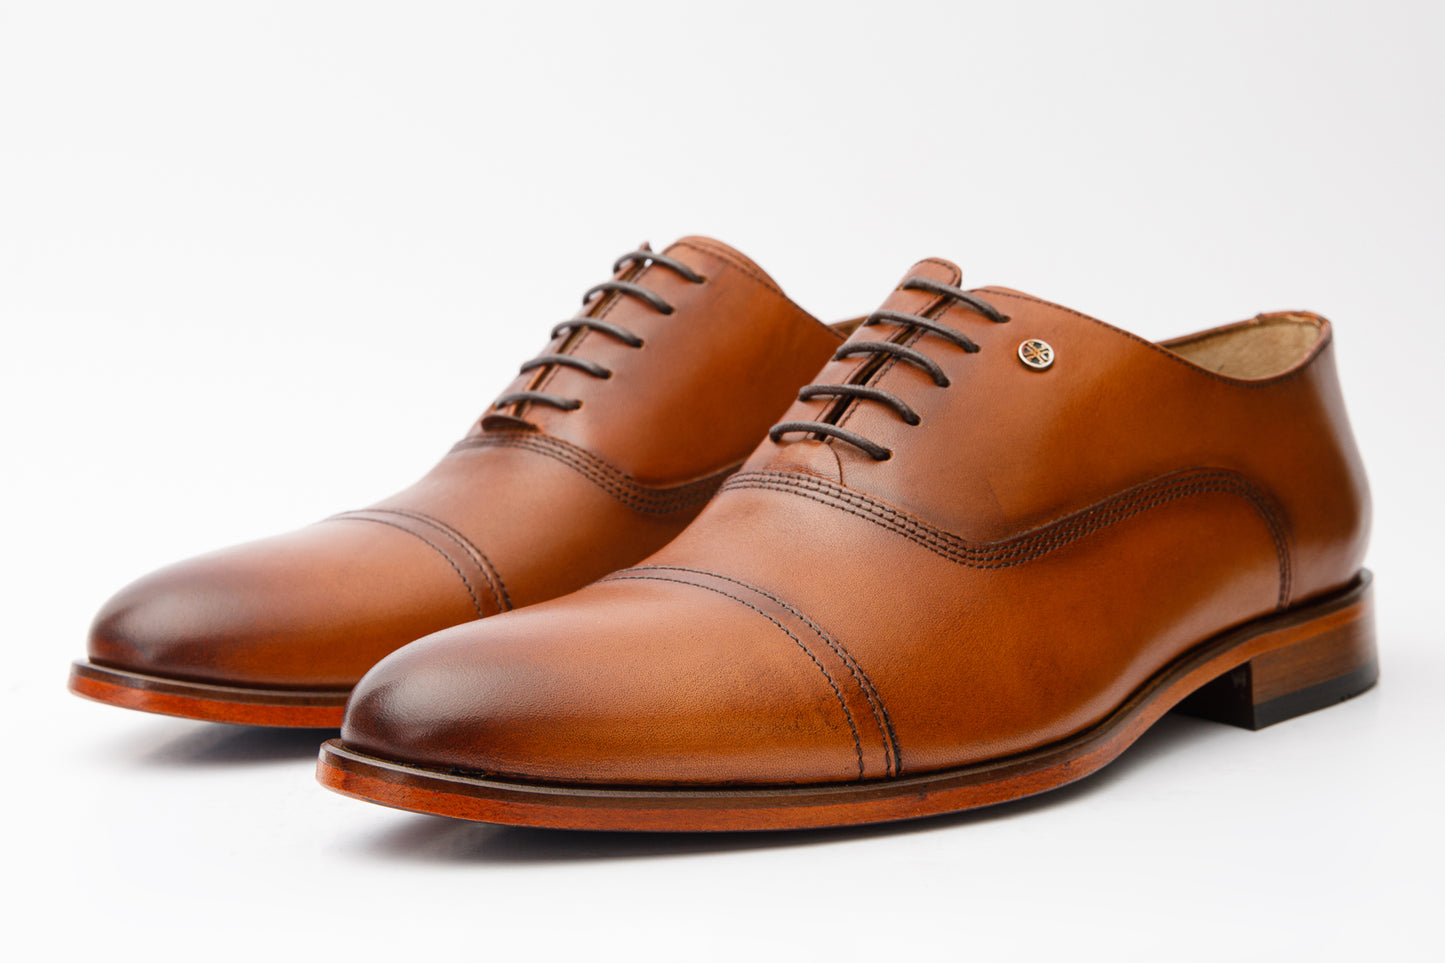 The Gambaha Tan Leather Quarter Brogue Cap Toe Oxford Men Shoe